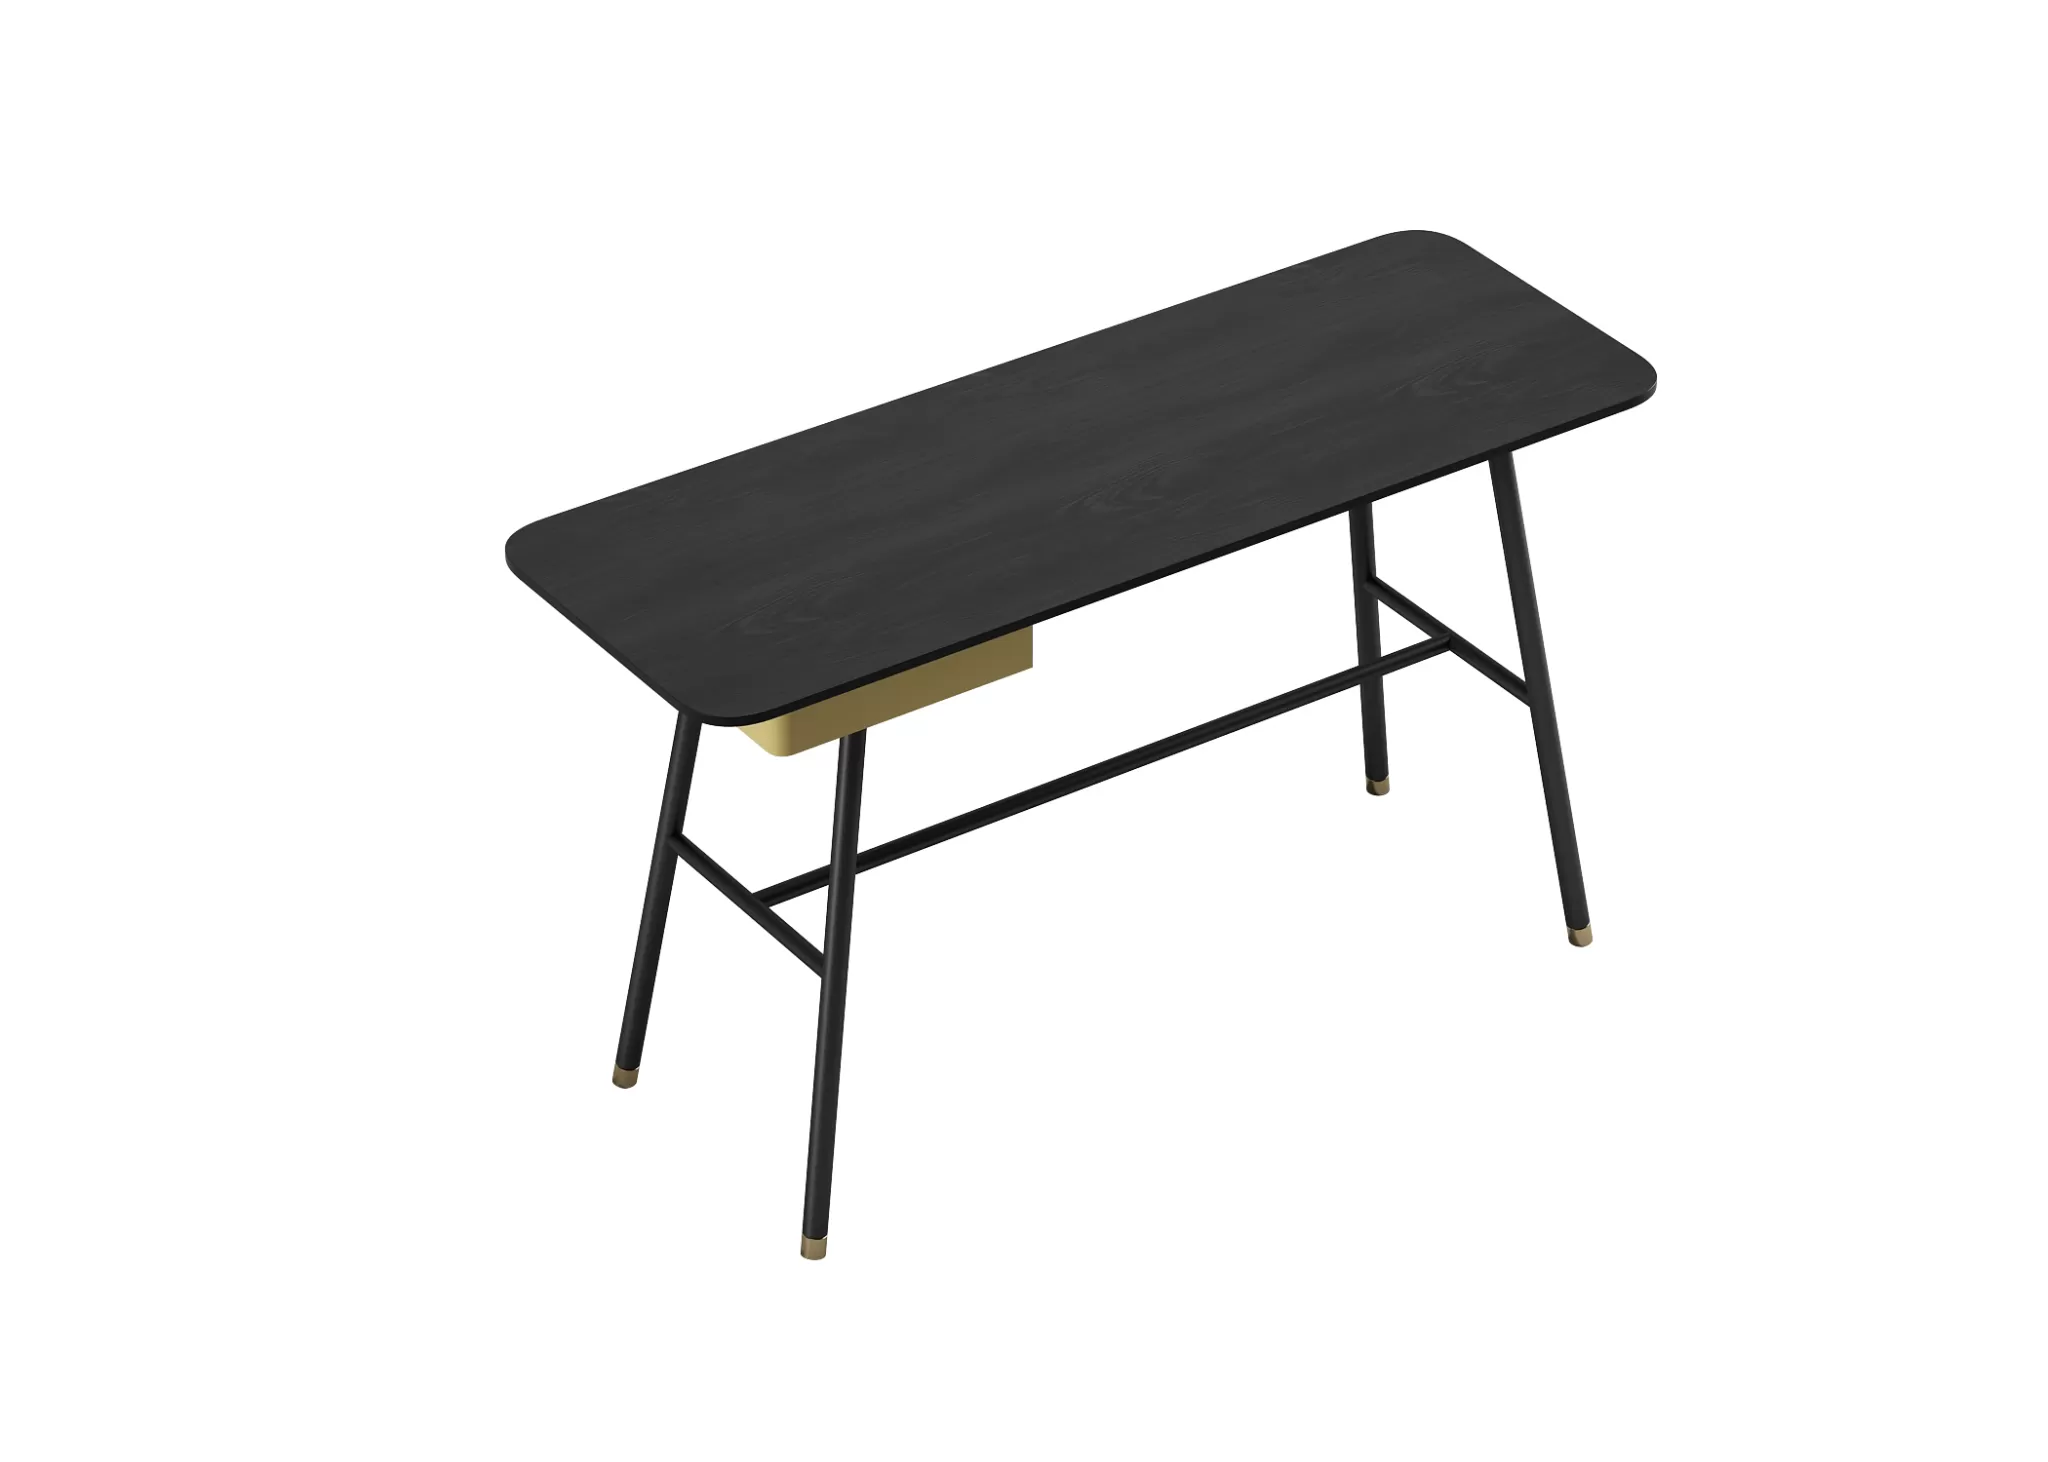 FURNITURE 3D MODELS – TABLES – 0381